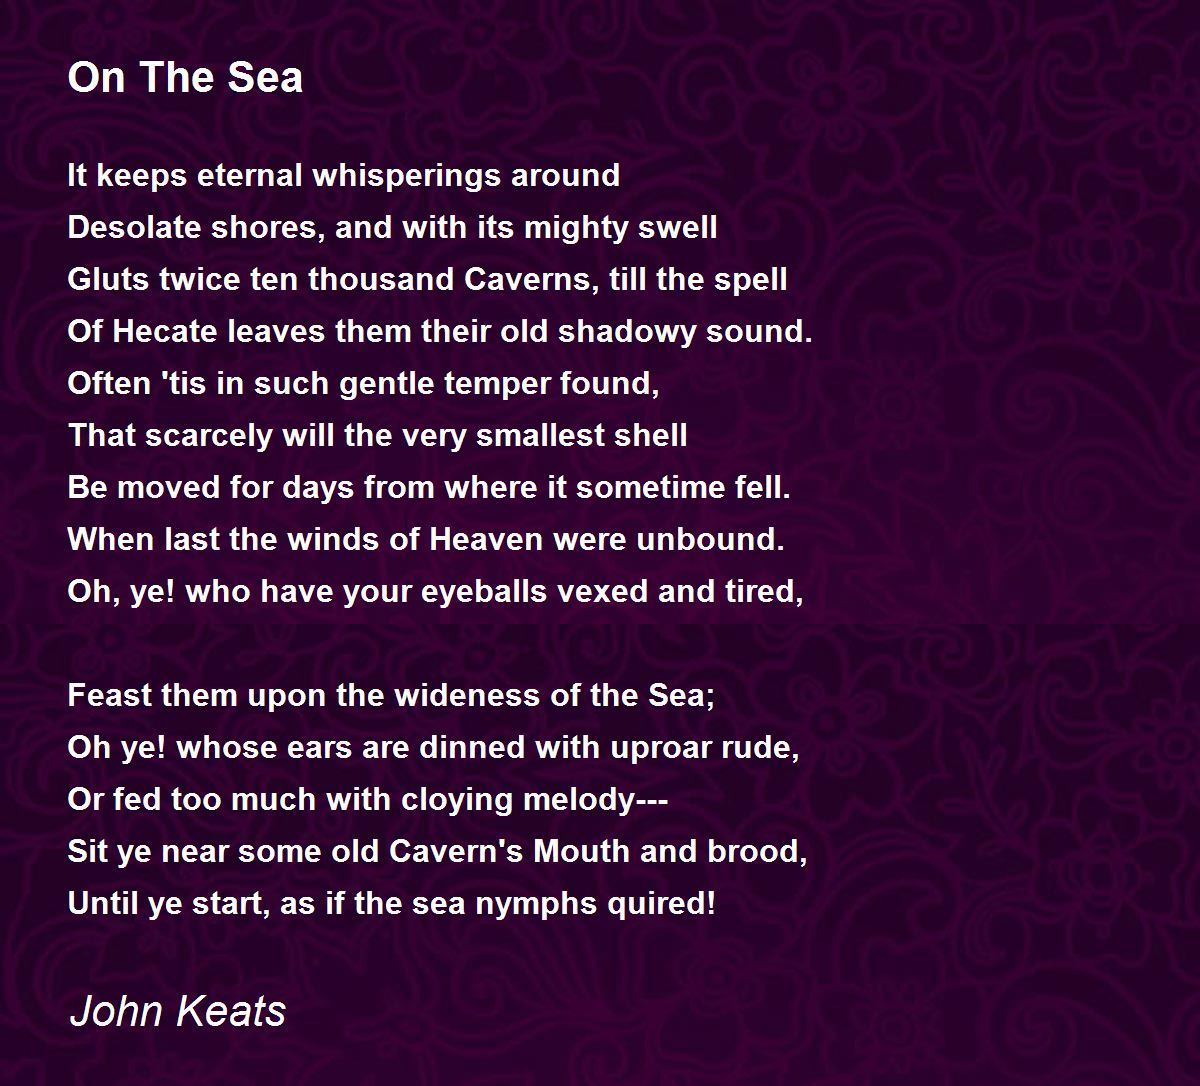 Keats poems about death